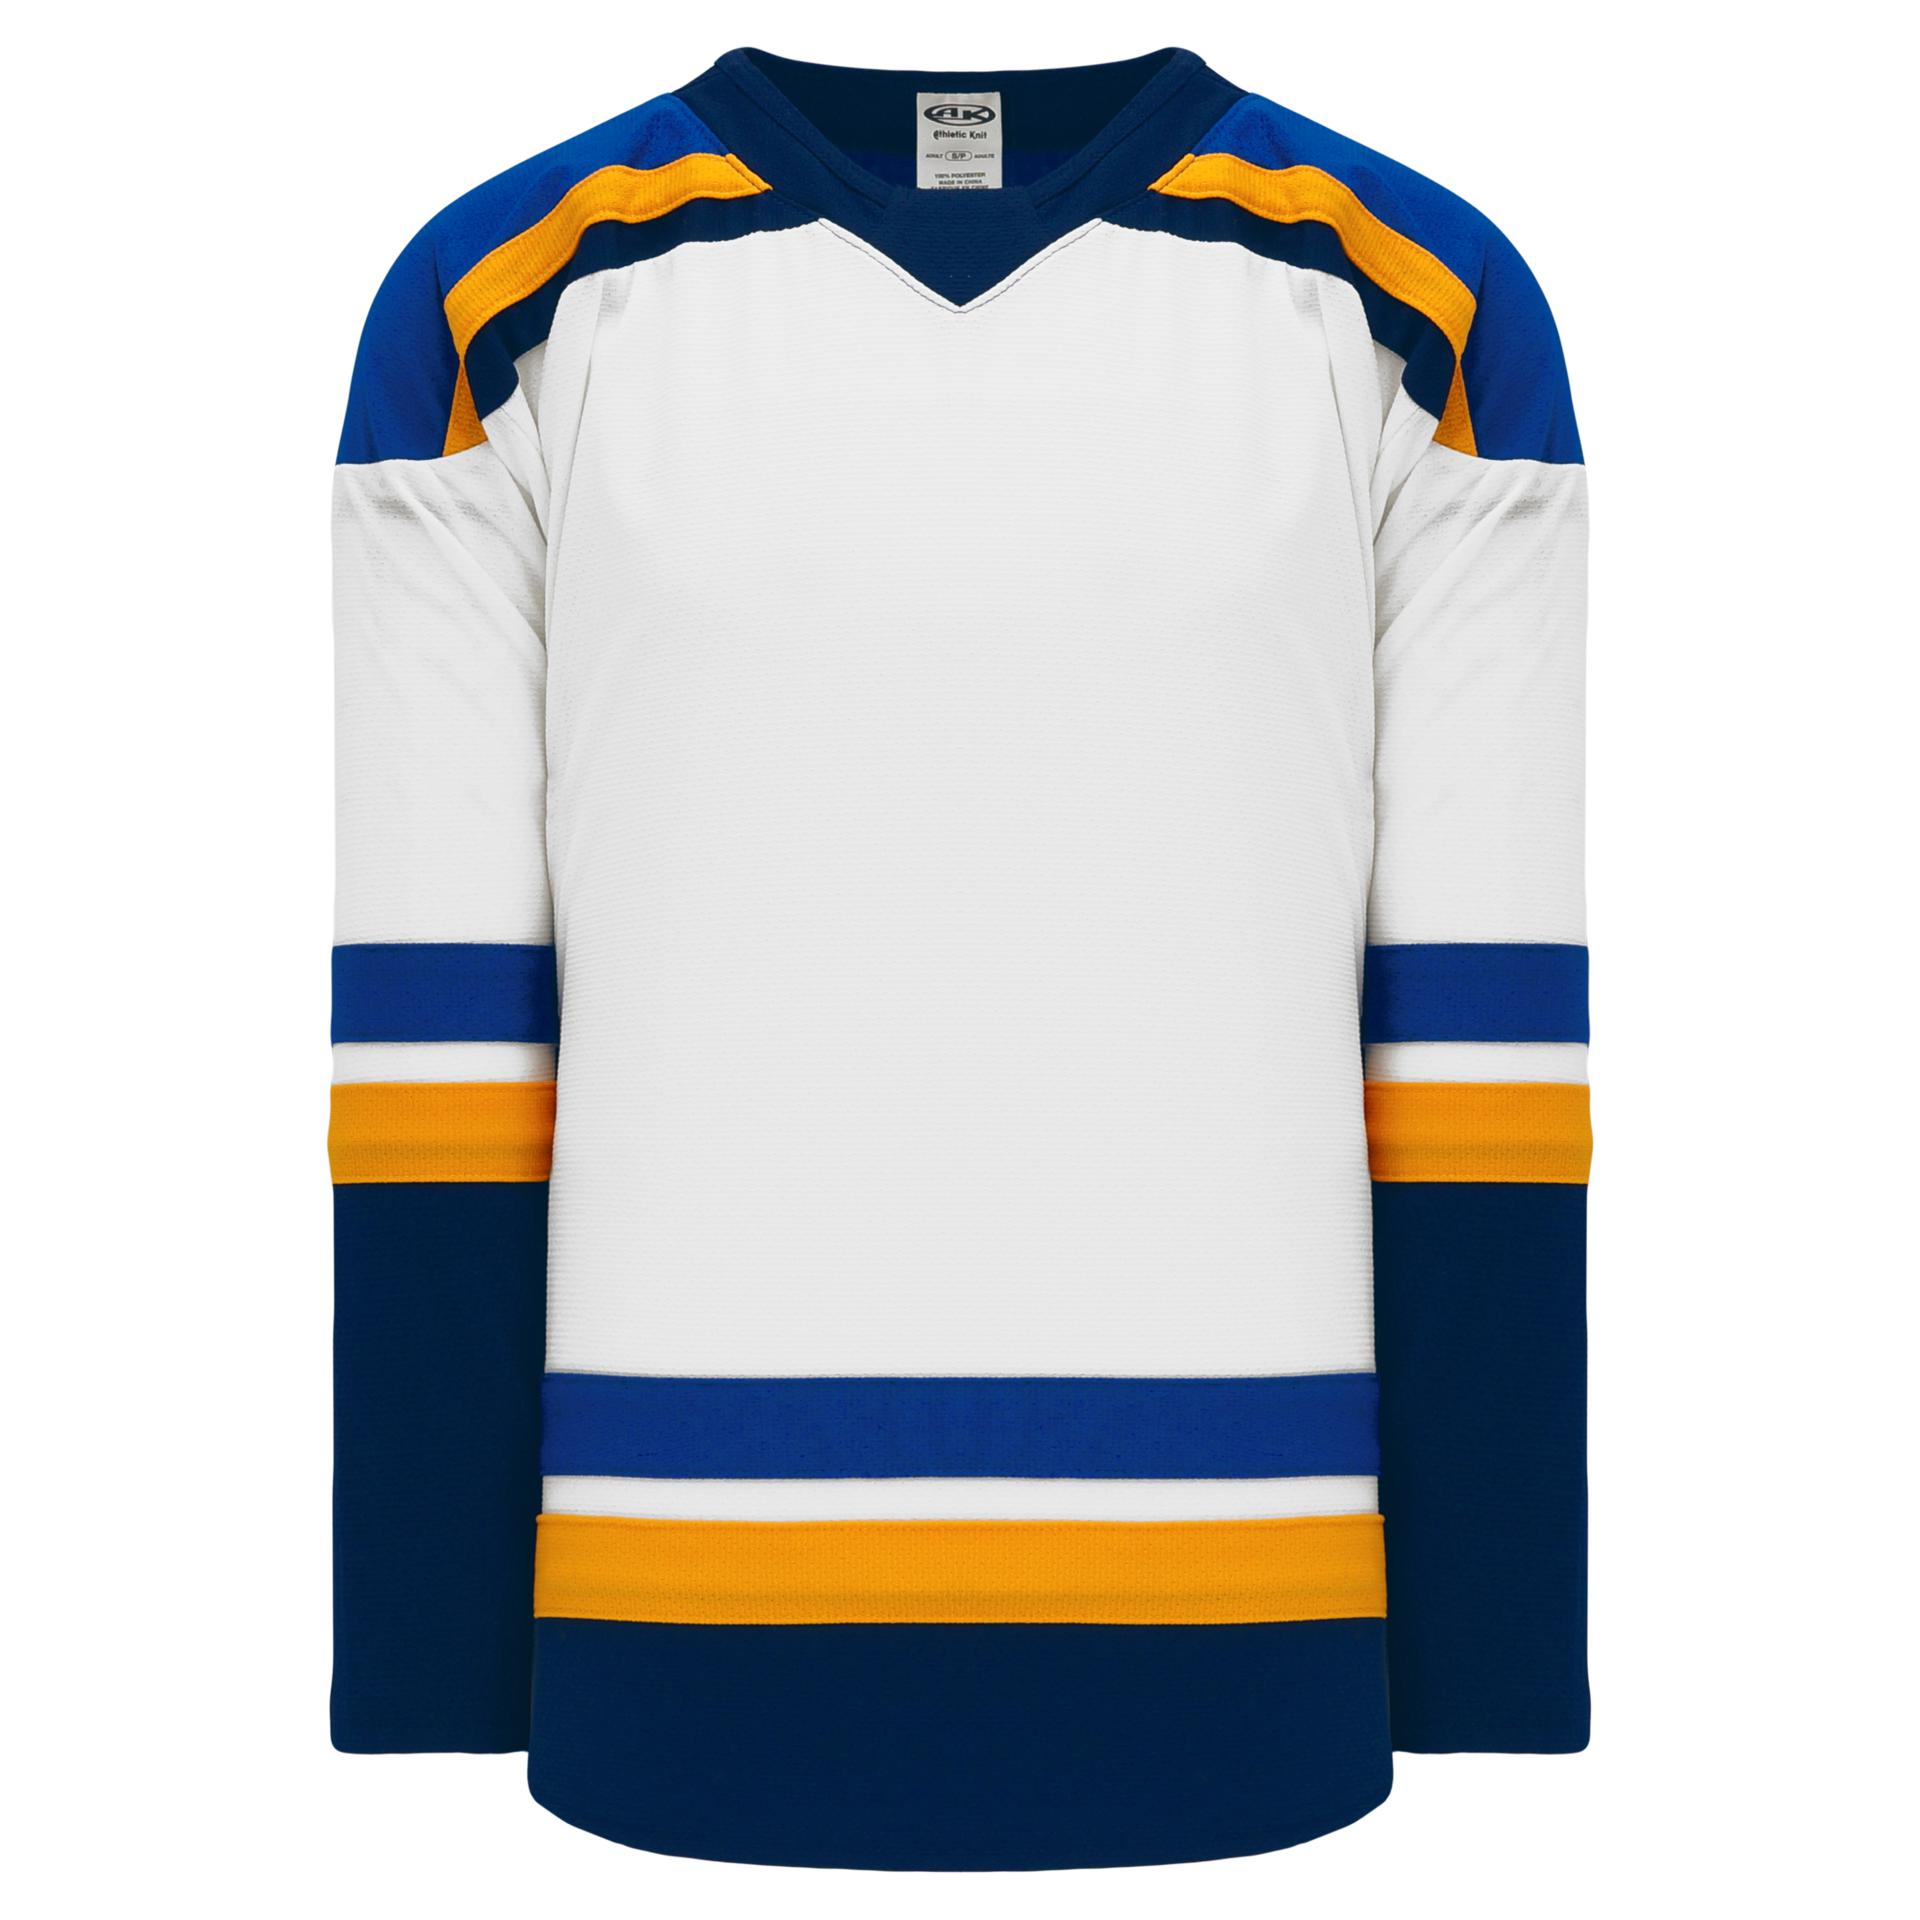 St. Louis Blues Jerseys, St. Louis Blues Jerseys, Blues Jersey, Hockey  Sweaters